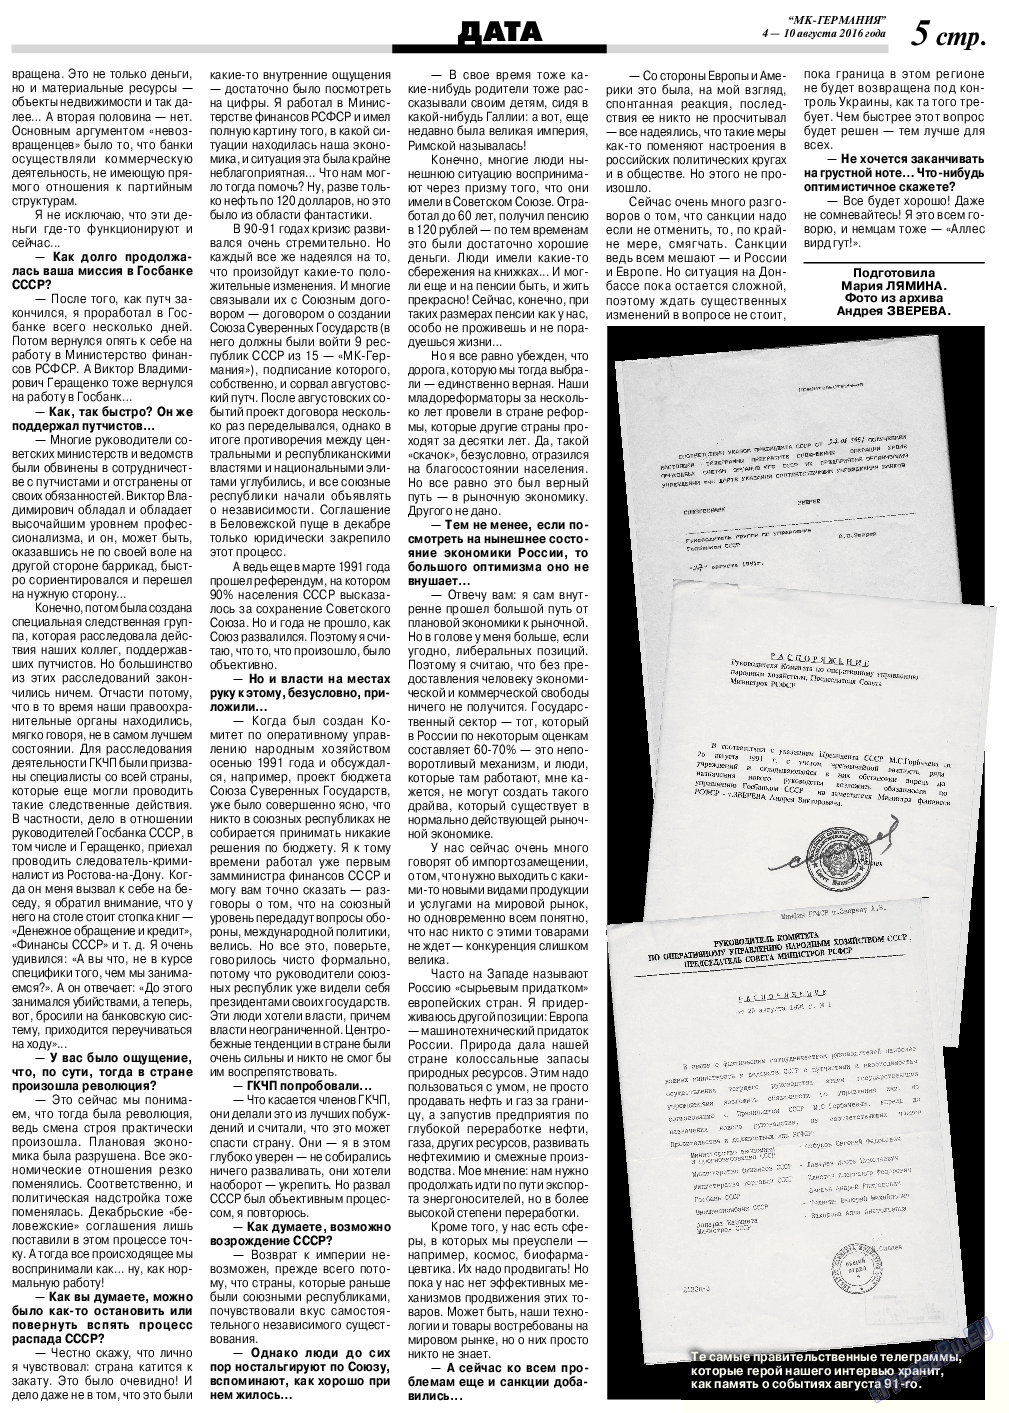 МК-Германия, газета. 2016 №32 стр.5